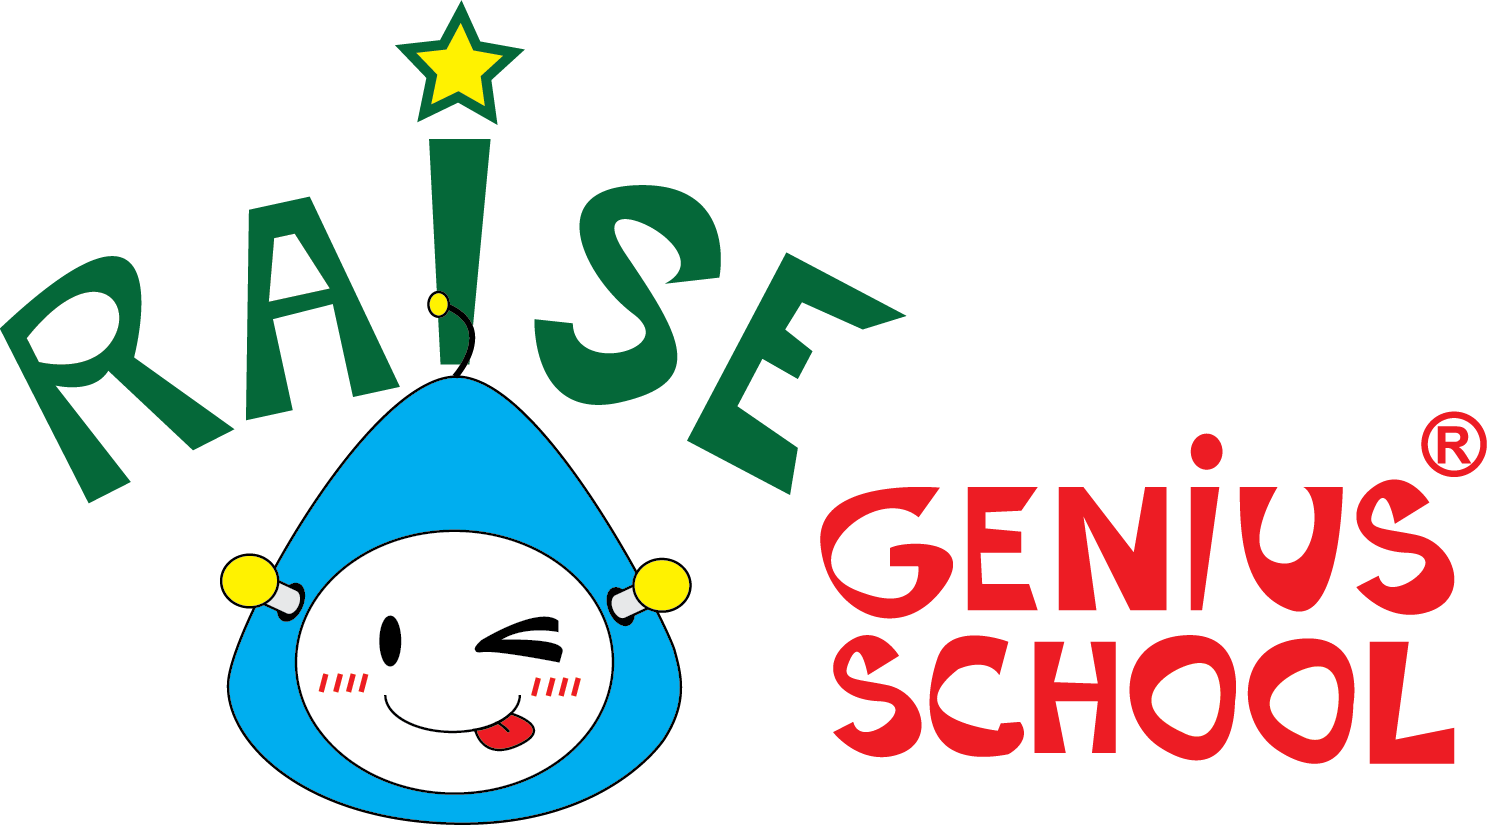 Raise Genius Franchise Raise Genius Franchise - Raise Genius School (1487x825)